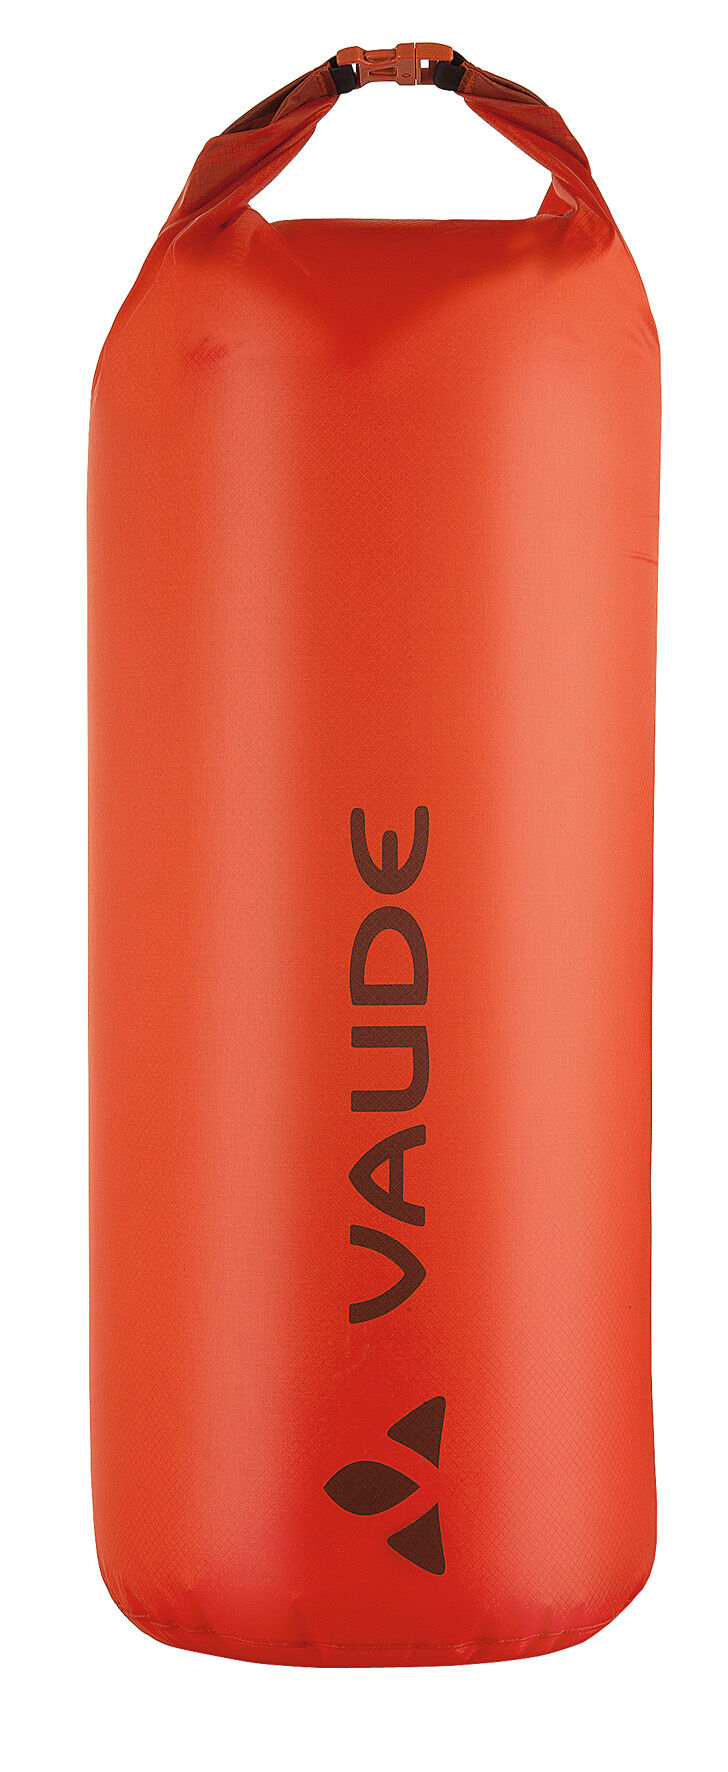 Vaude - Drybag Cordura Light